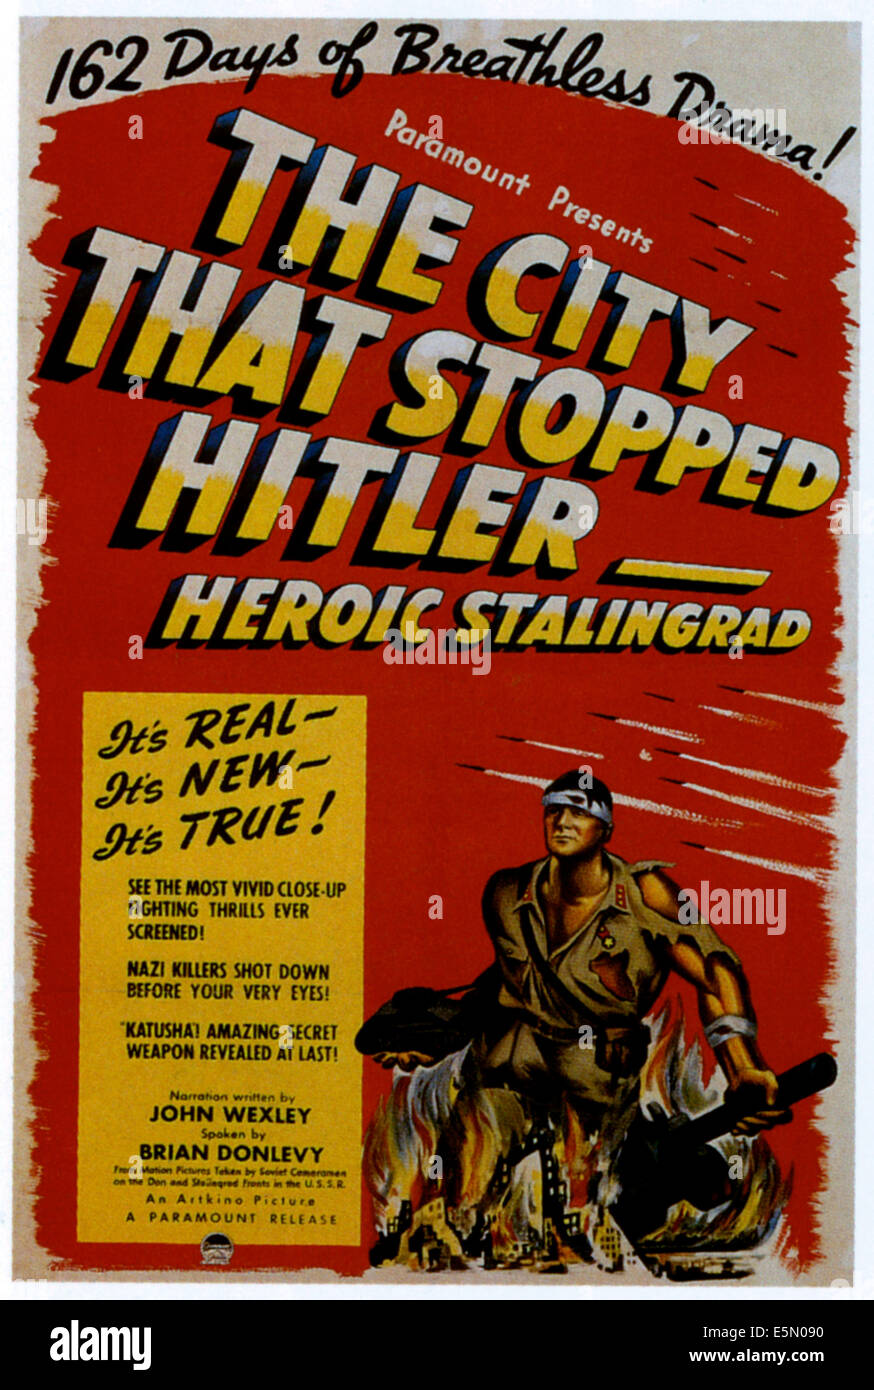 THE CITY THAT STOPPED HITLER: HEROIC STALINGRAD, 1943. Stock Photo